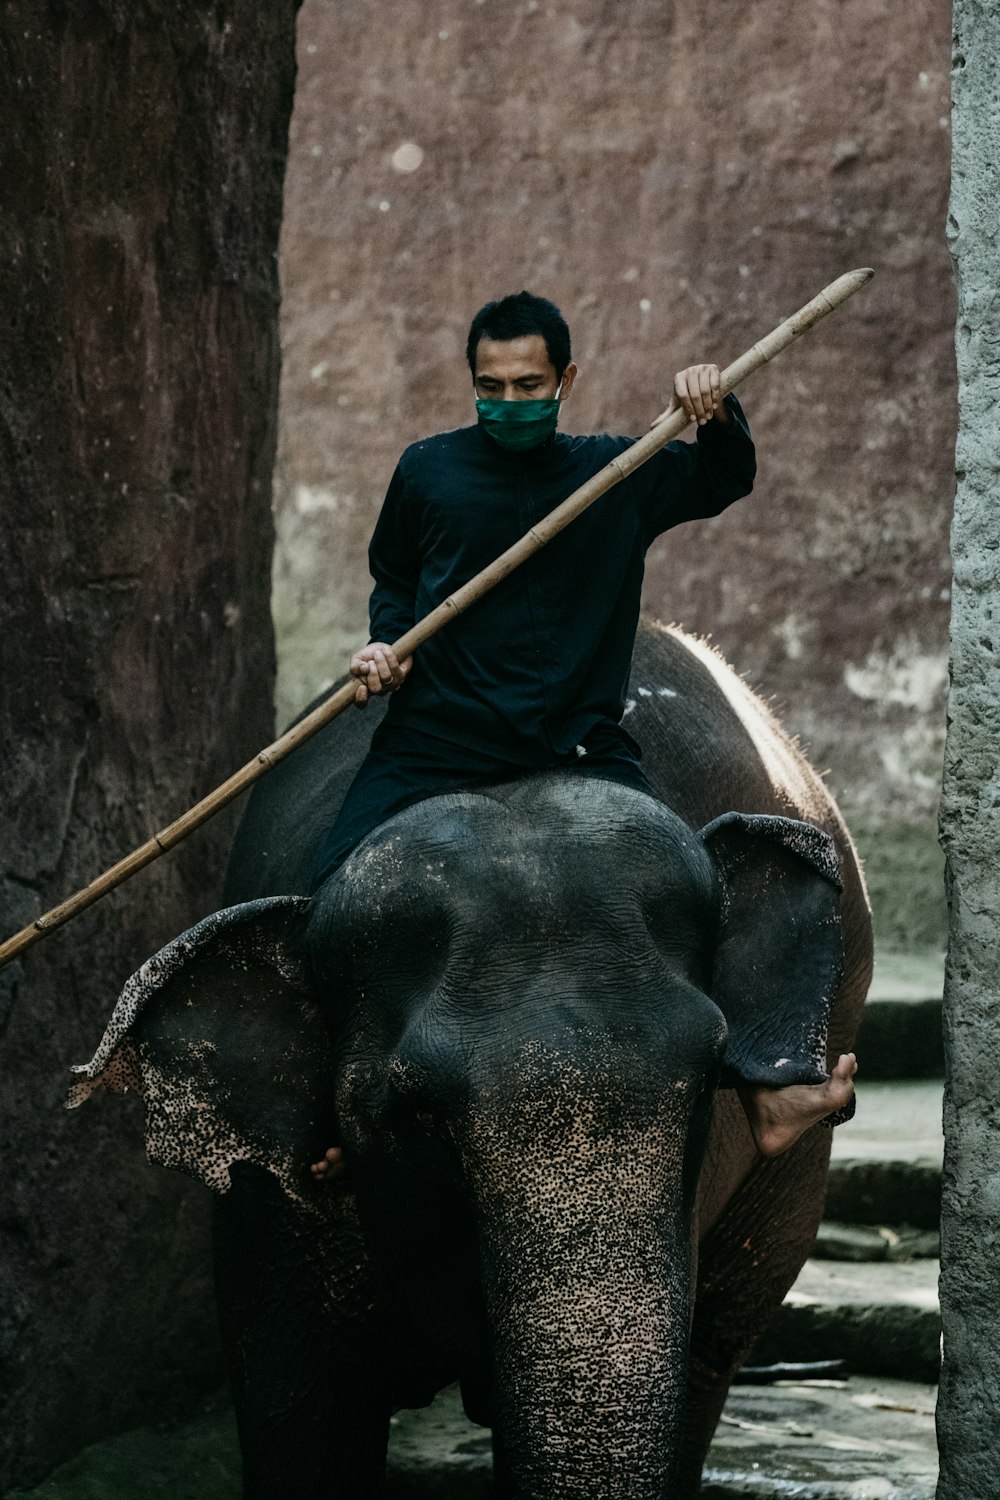 man in black shirt riding on black elephant during daytime